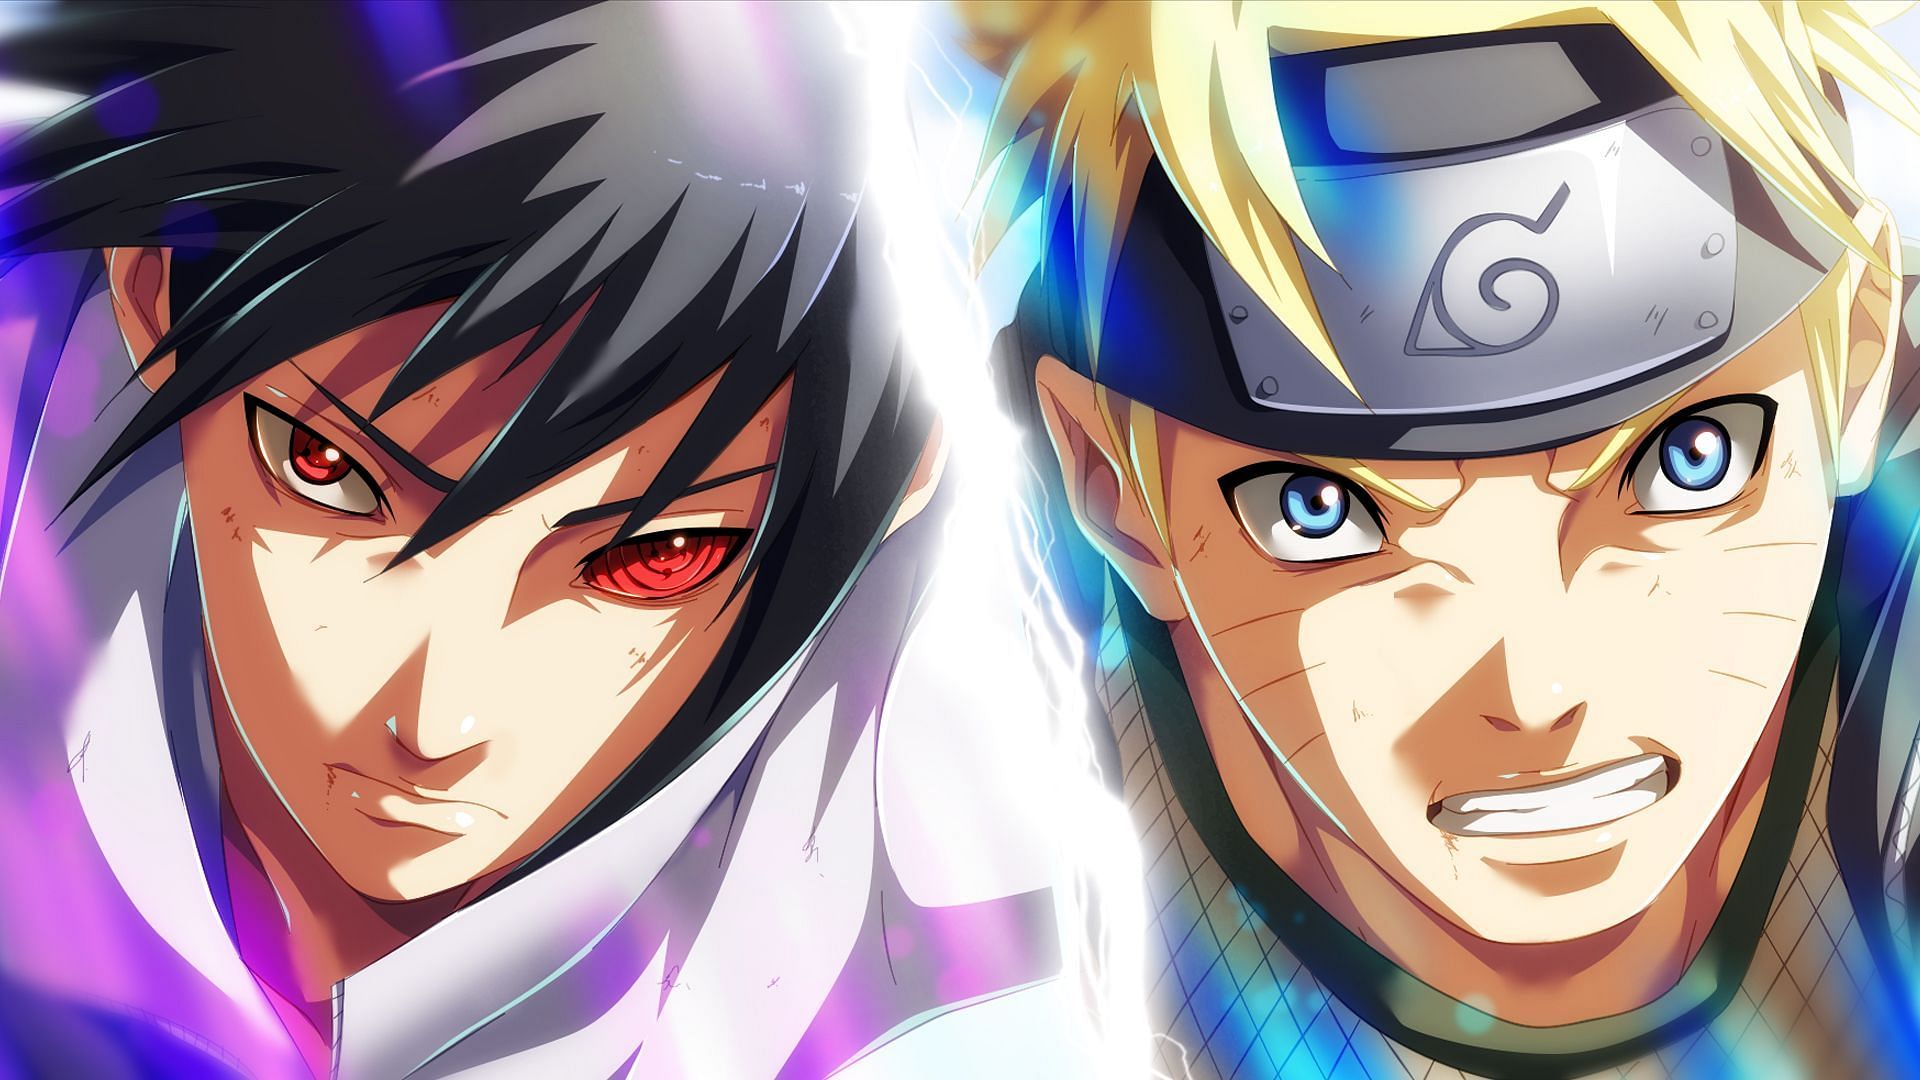 Naruto and Sasuke (Image via Pierrot)